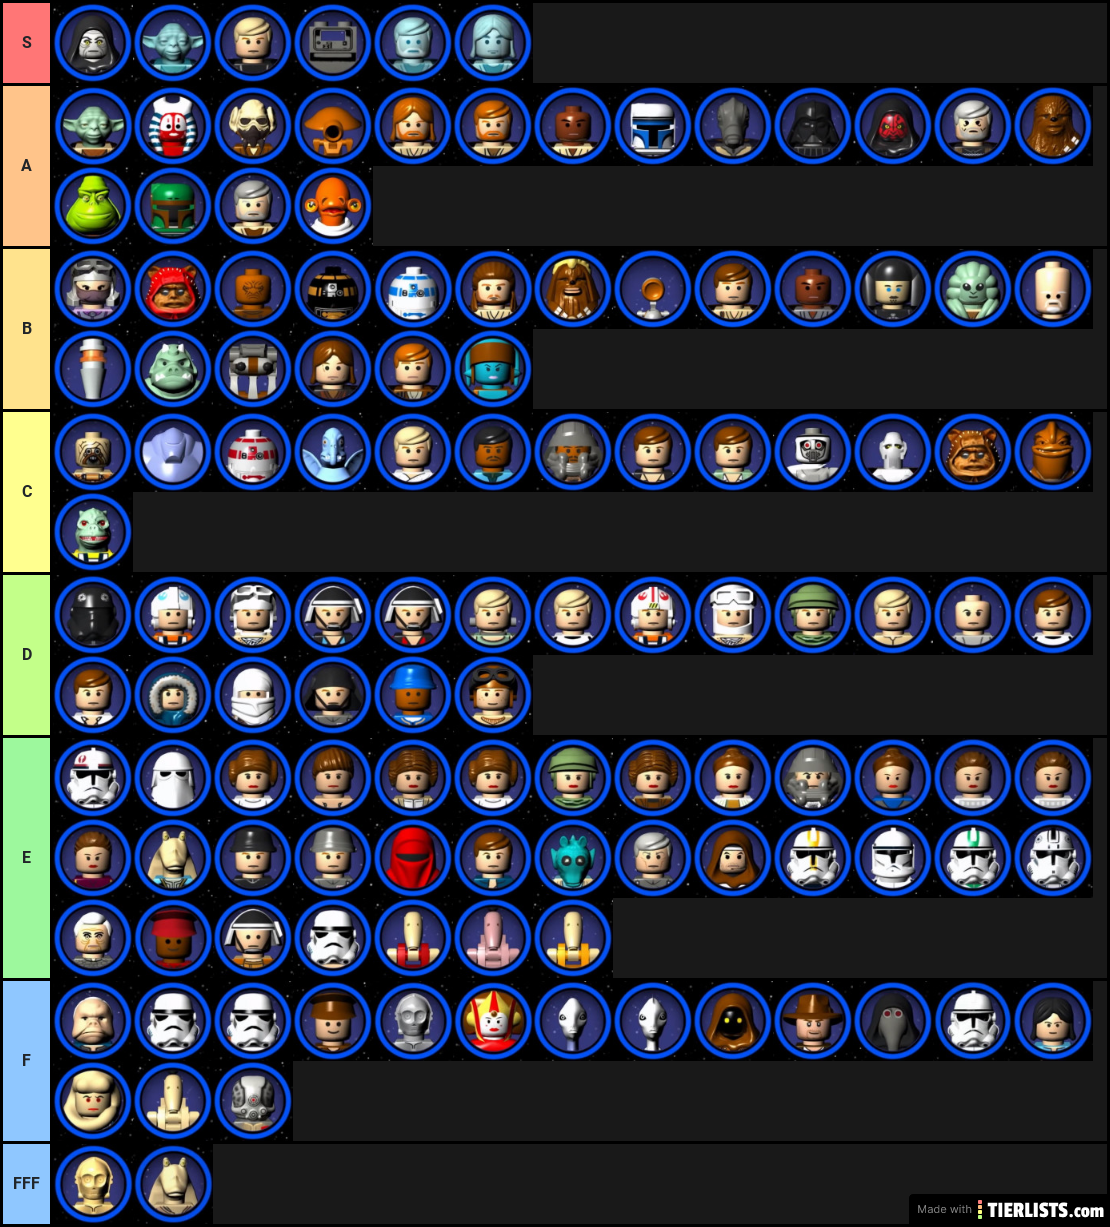 lego star wars characters list